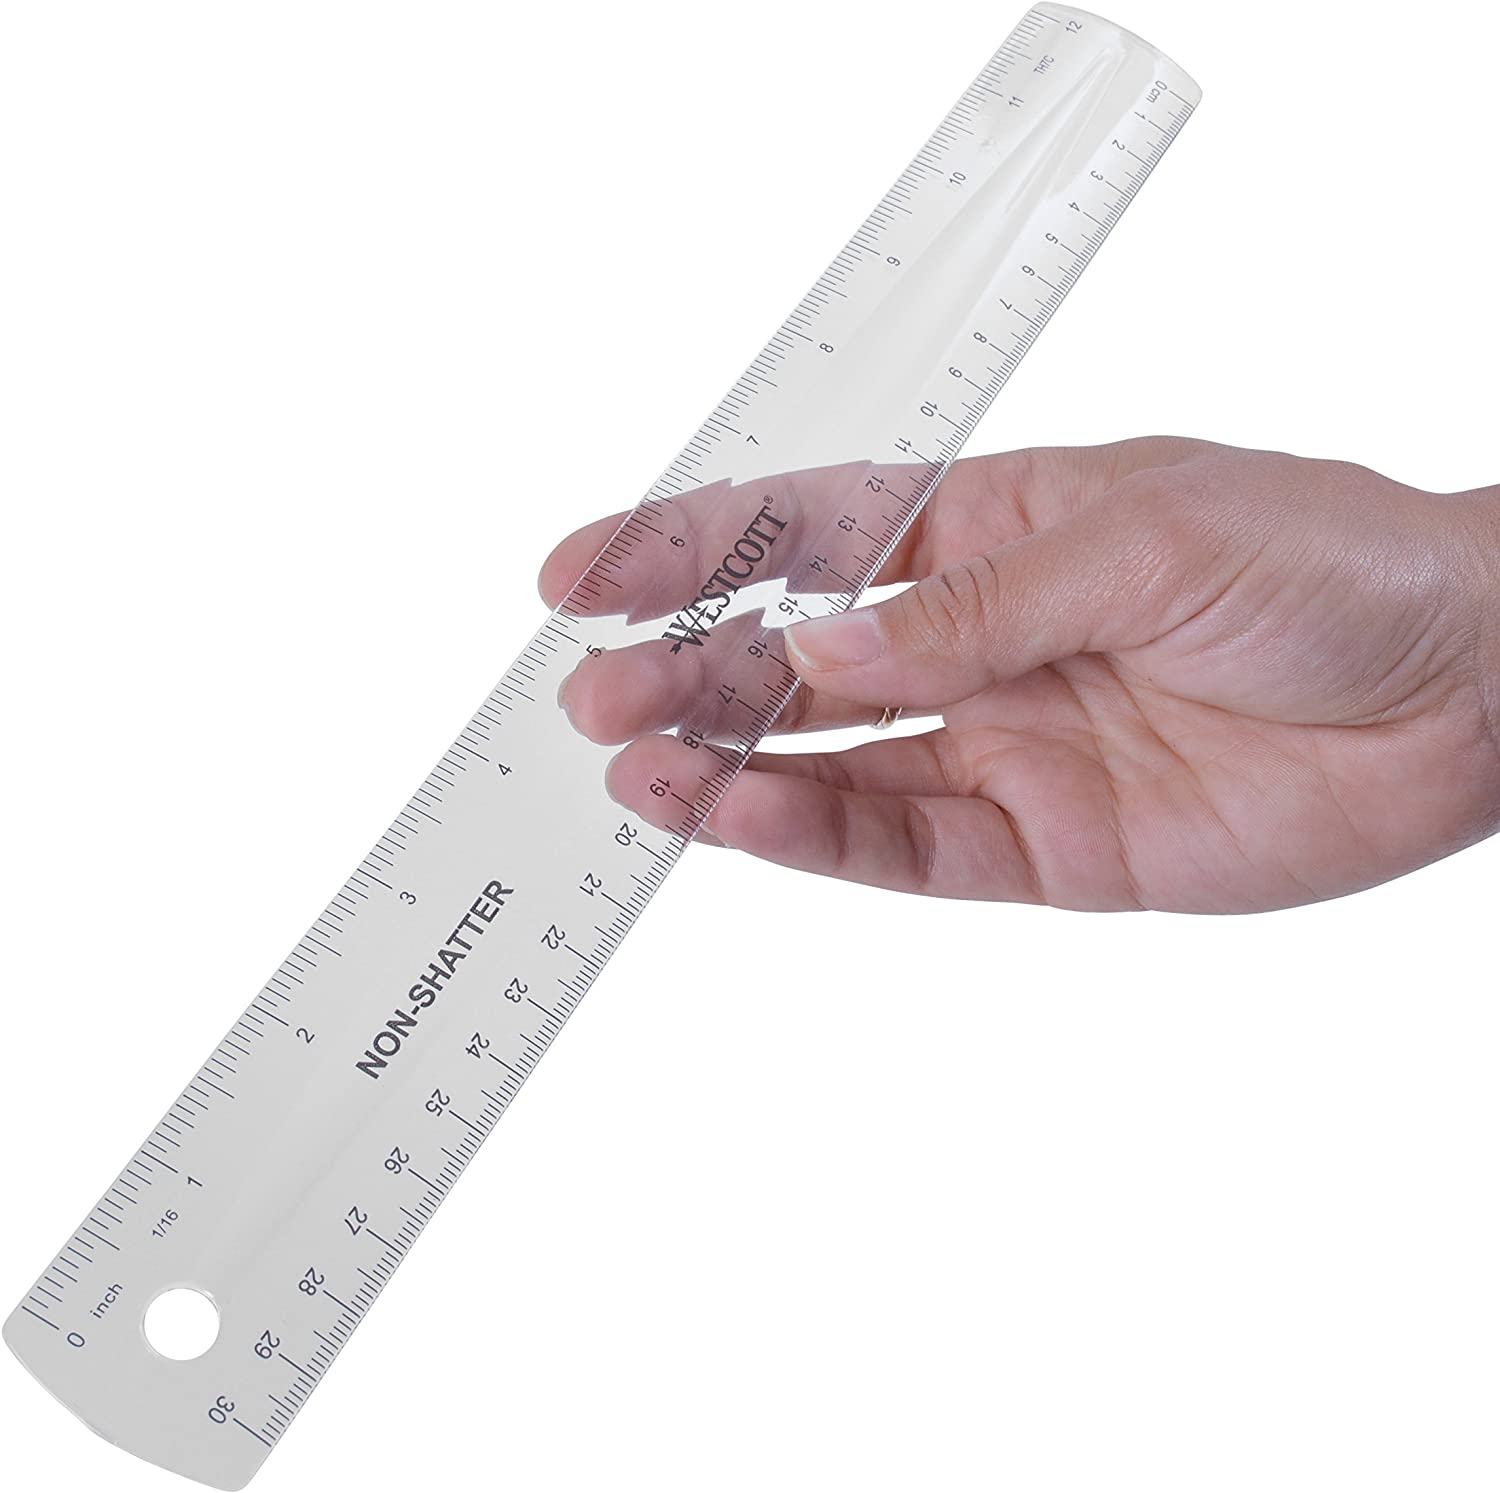 Westcott Finger Grip Ruler, 12-Inch